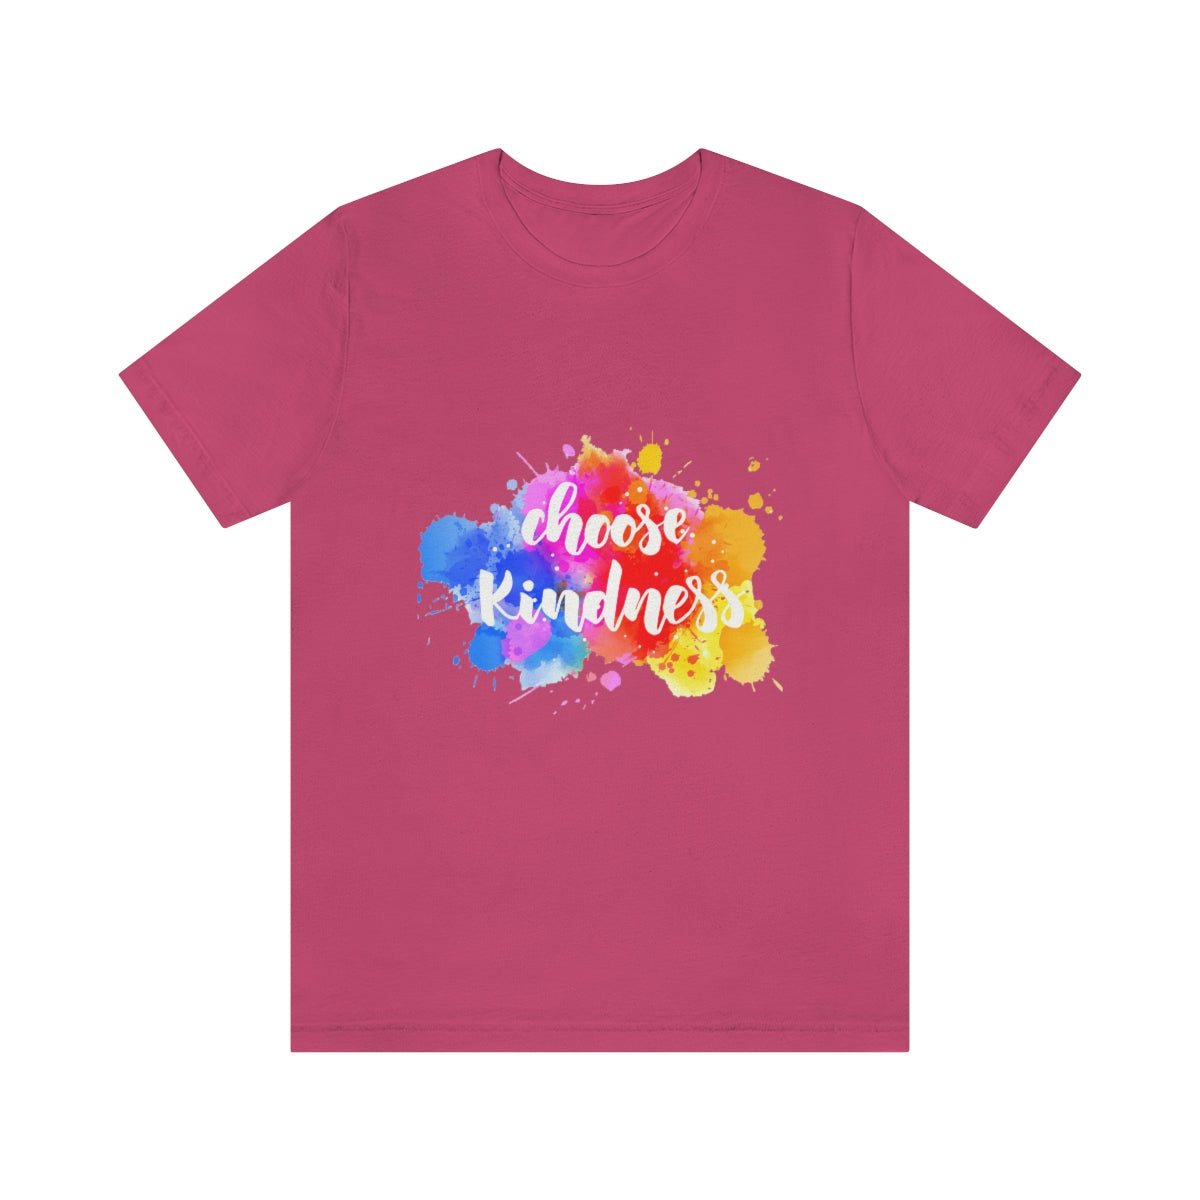 Unisex Jersey Short Sleeve Tee "Pink shirt DAY Choose kindness"